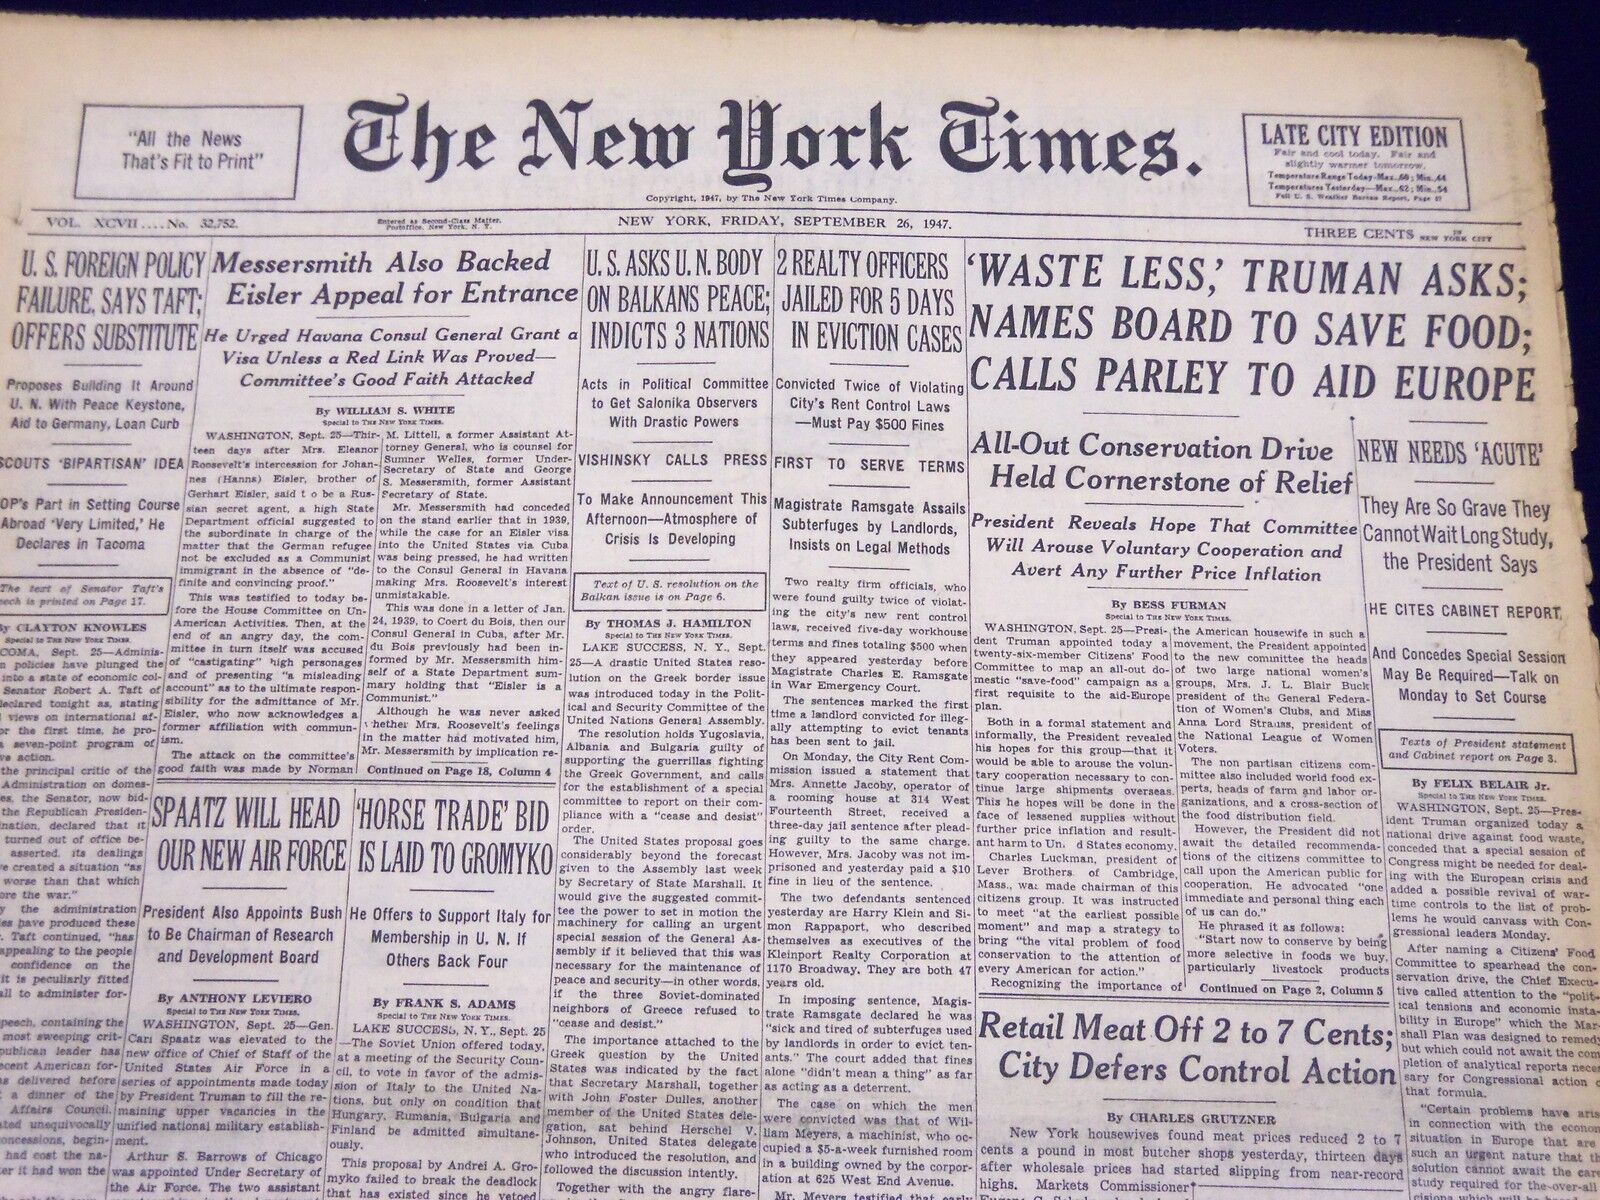 1947 SEPTEMBER 26 NEW YORK TIMES - WASTE LESS TRUMAN ASKS - NT 114